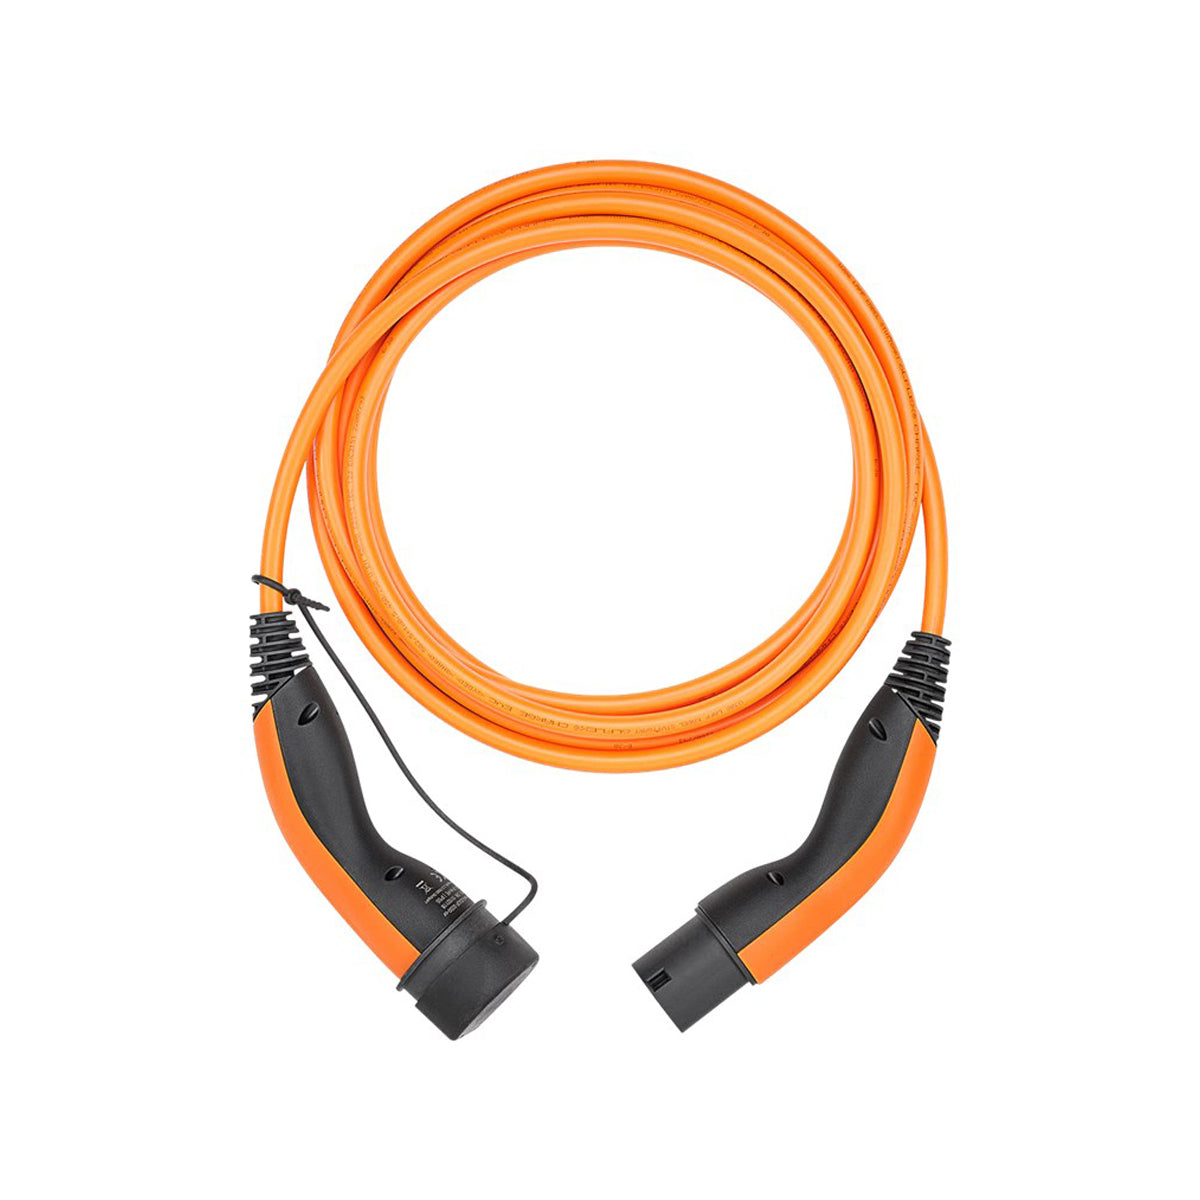 LAPP EV Charge Cable Type 2 (22kW-3P-32A) 5m - Orange.